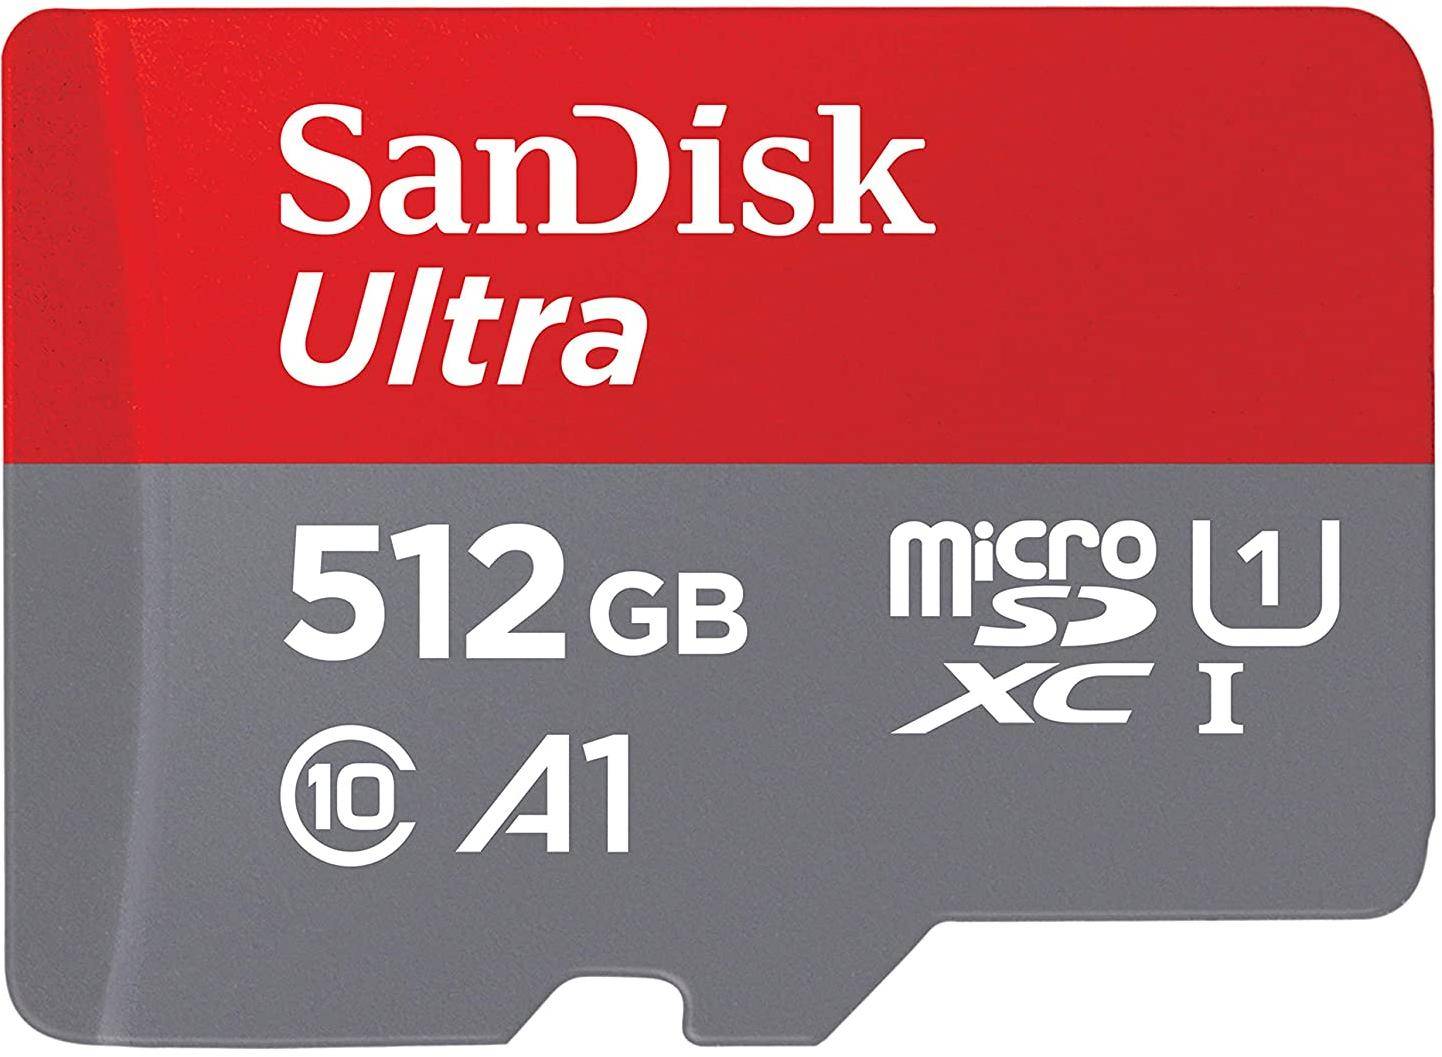 Sandisk Ultra MicroSDXC UHS-I 512GB Memory Card zoom image